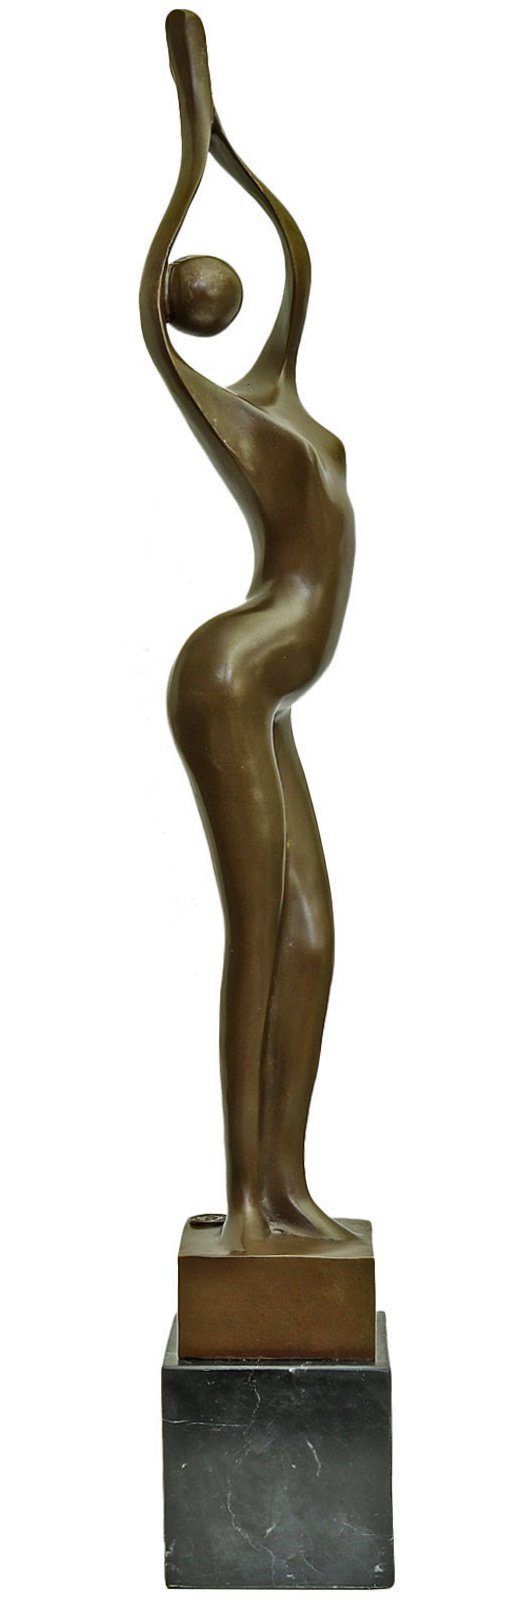 Aubaho Skulptur Bronzeskulptur Erotik erotische Kunst im Antik-Stil Bronze Figur Statu | Skulpturen